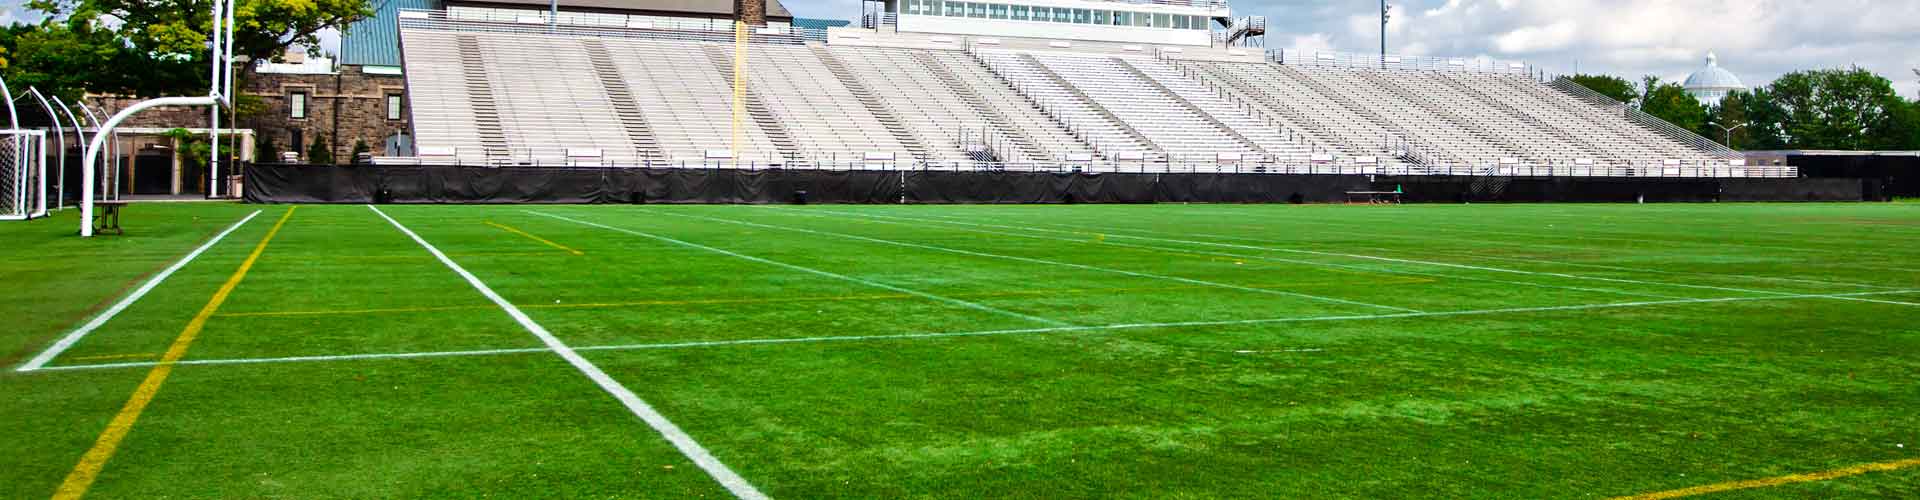 Artificial grass installation for a school football field in Hawaii